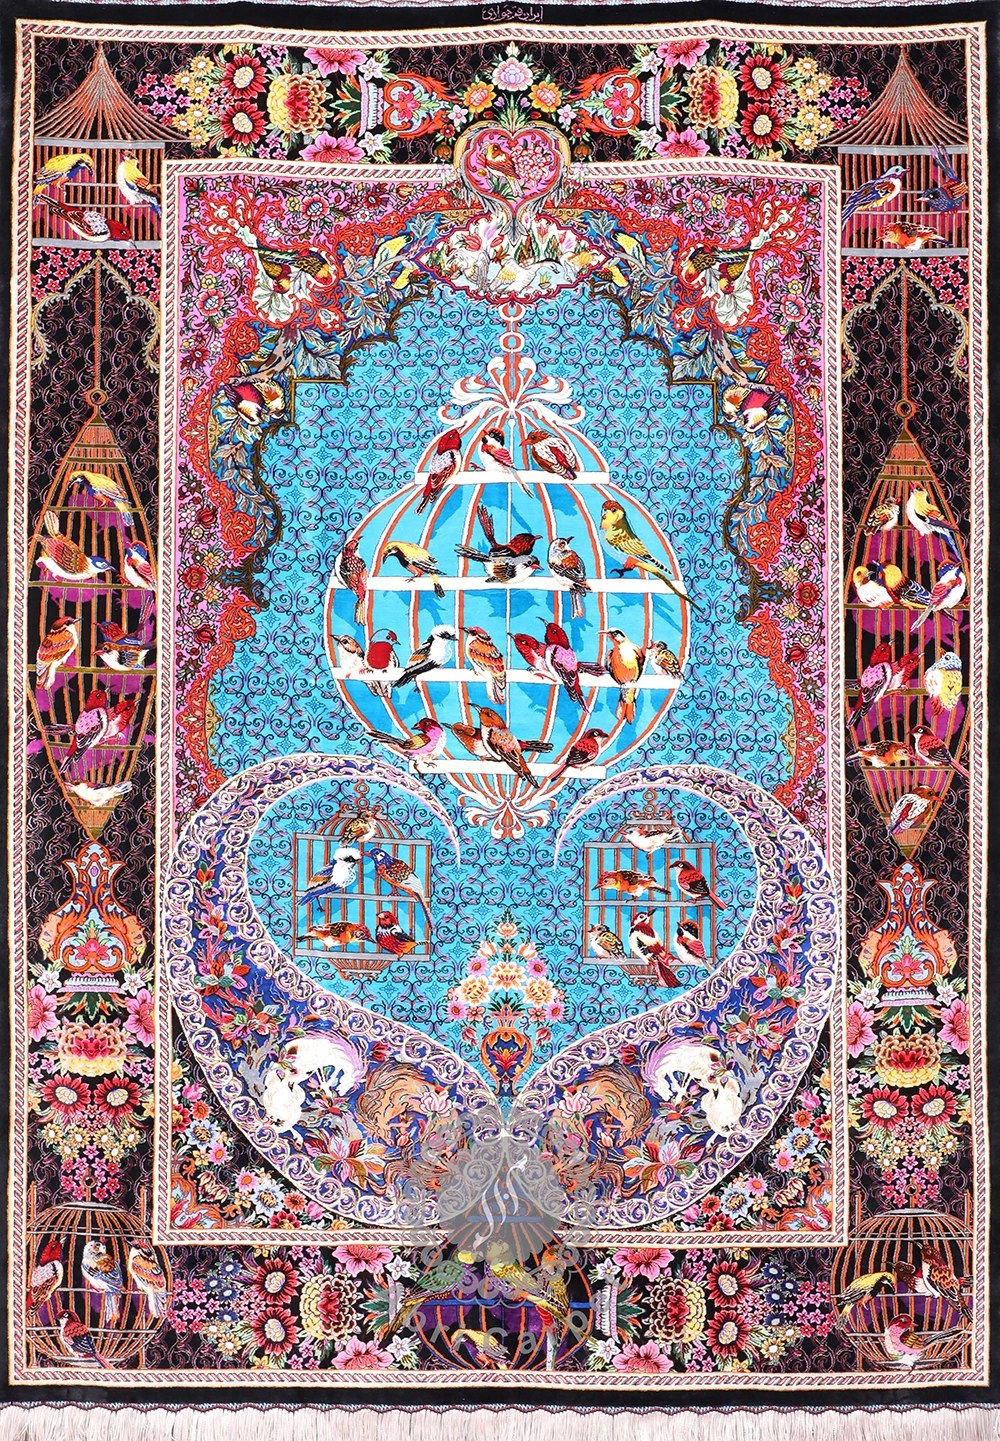 Special Mihrabi-Prayer design Handwoven carpet